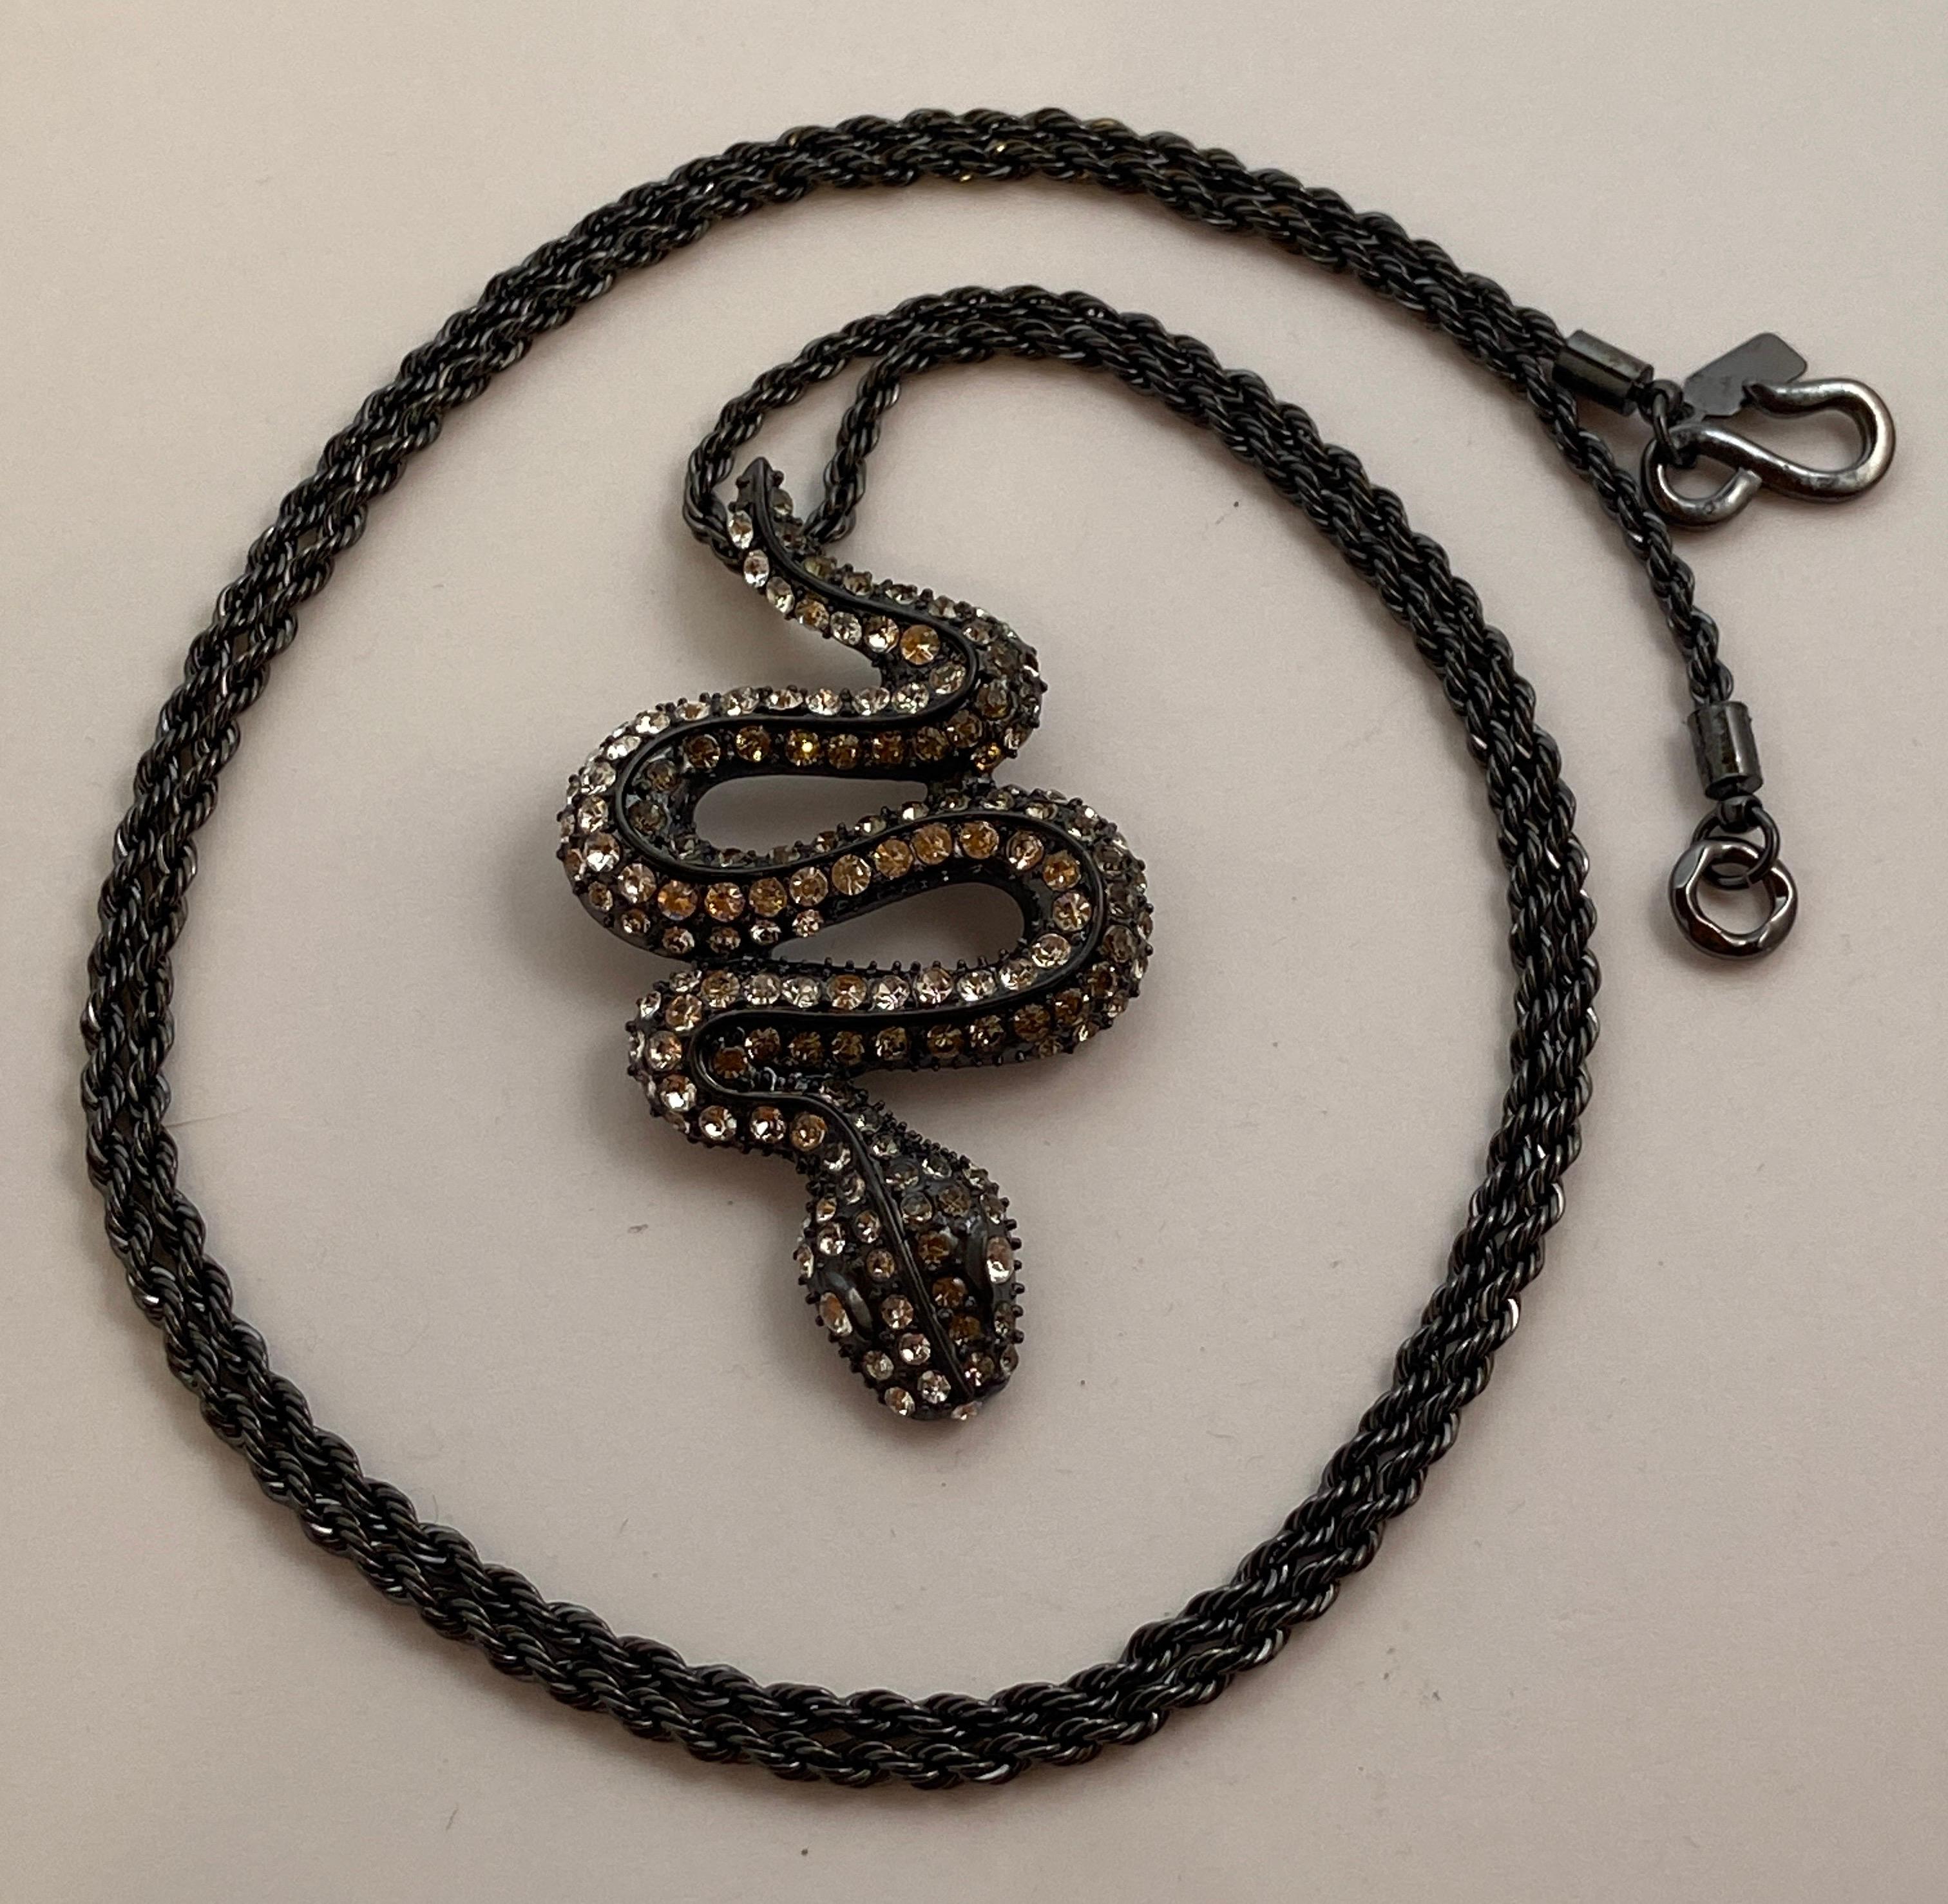 Artisan Kenneth Jay Lane - Ensemble pendentif et collier « serpent » en strass noir de taille moyenne